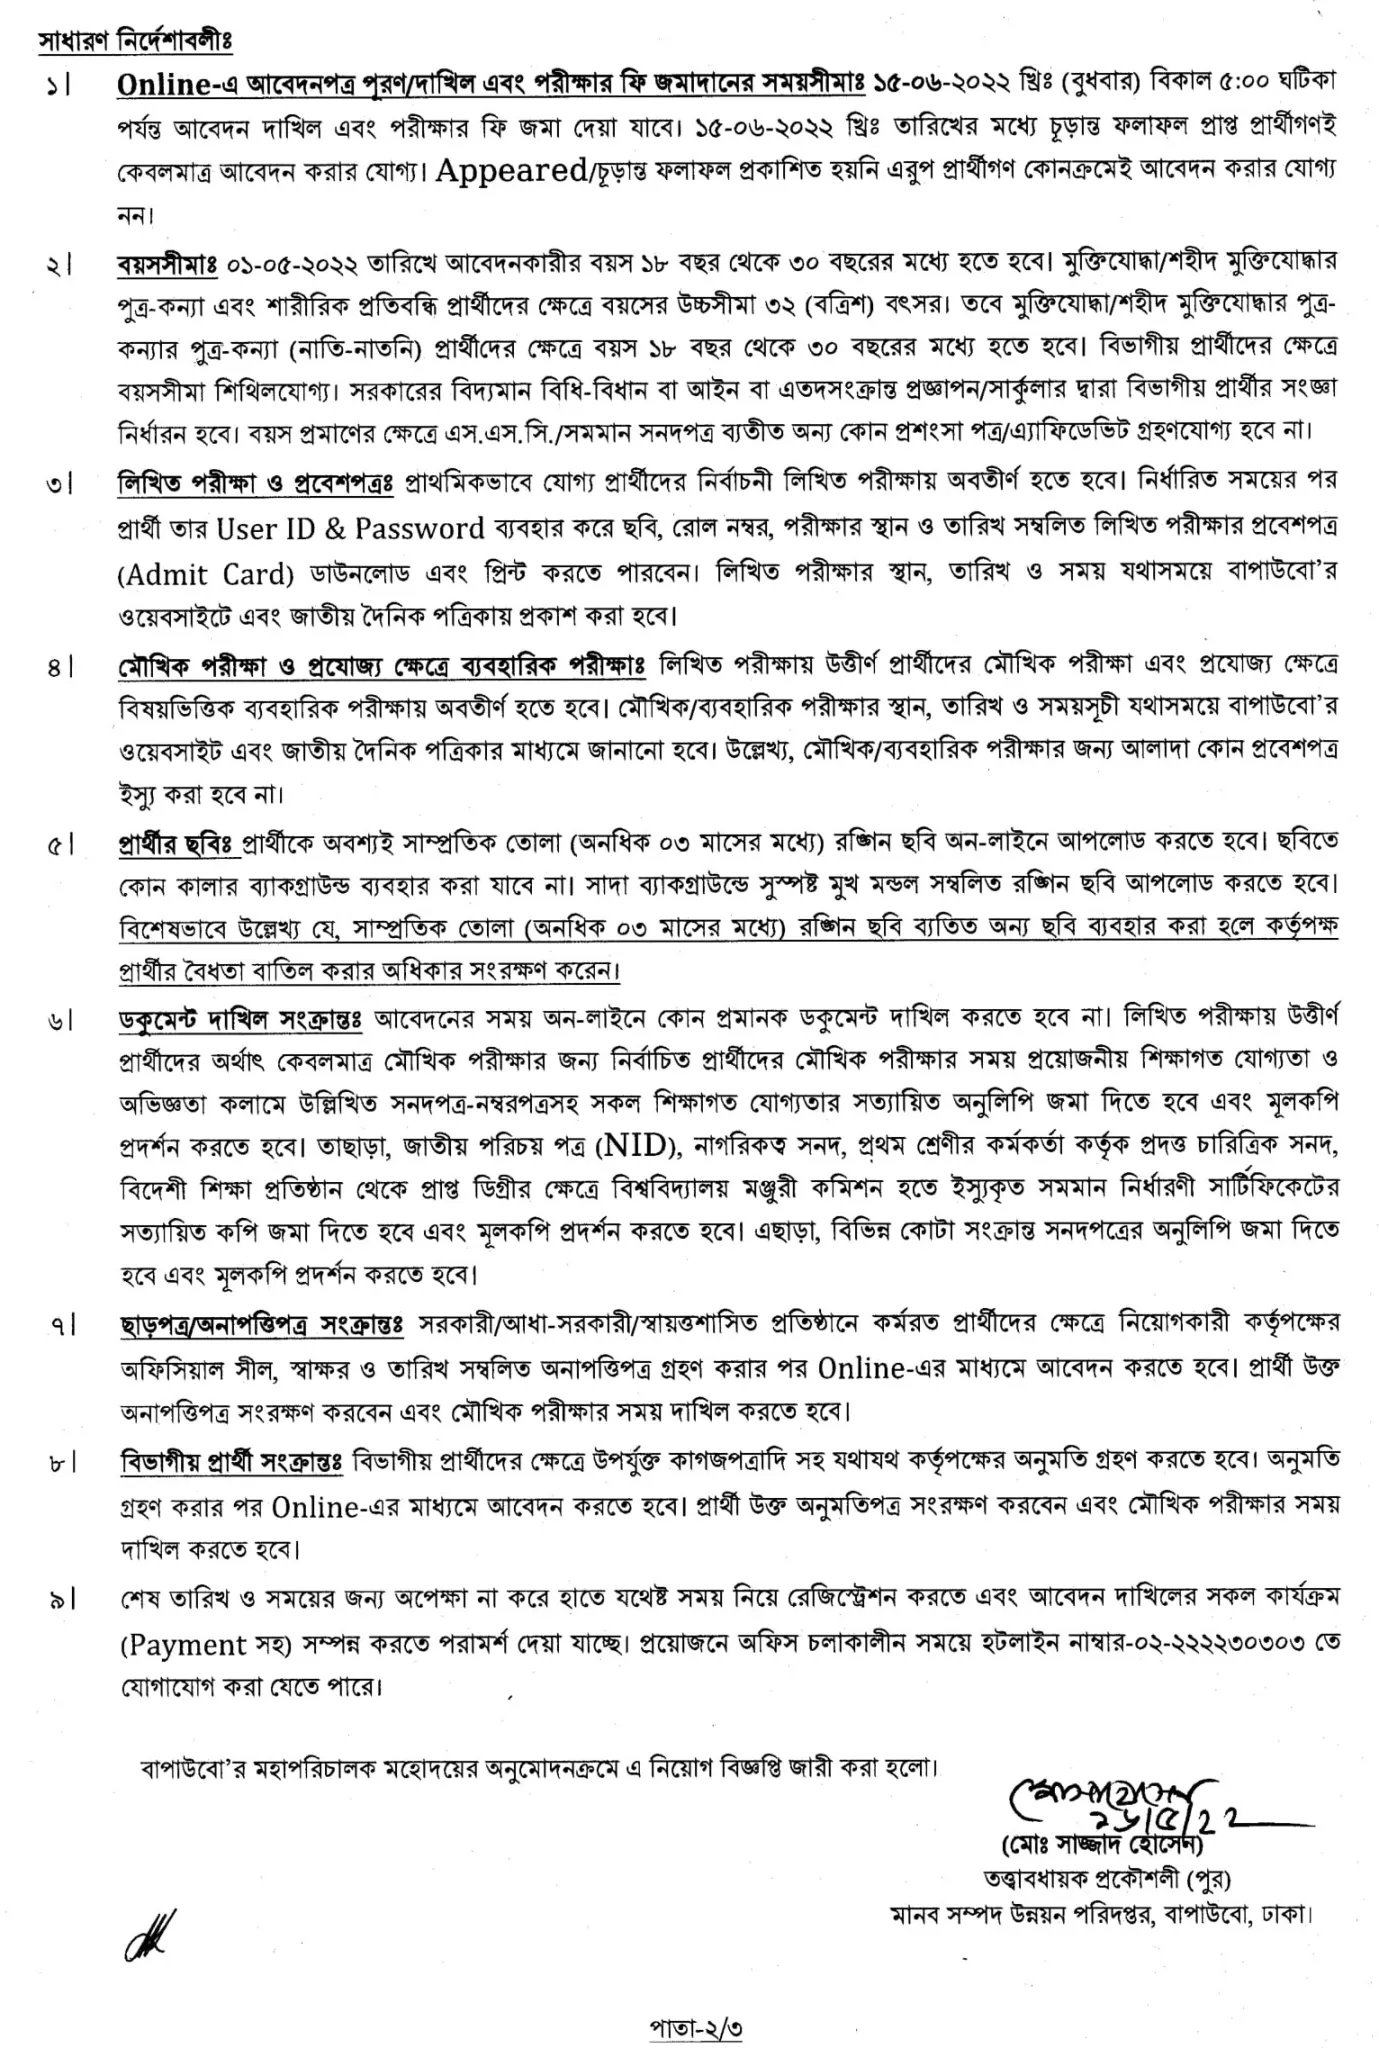 Bangladesh Water Development Board Job Circular2